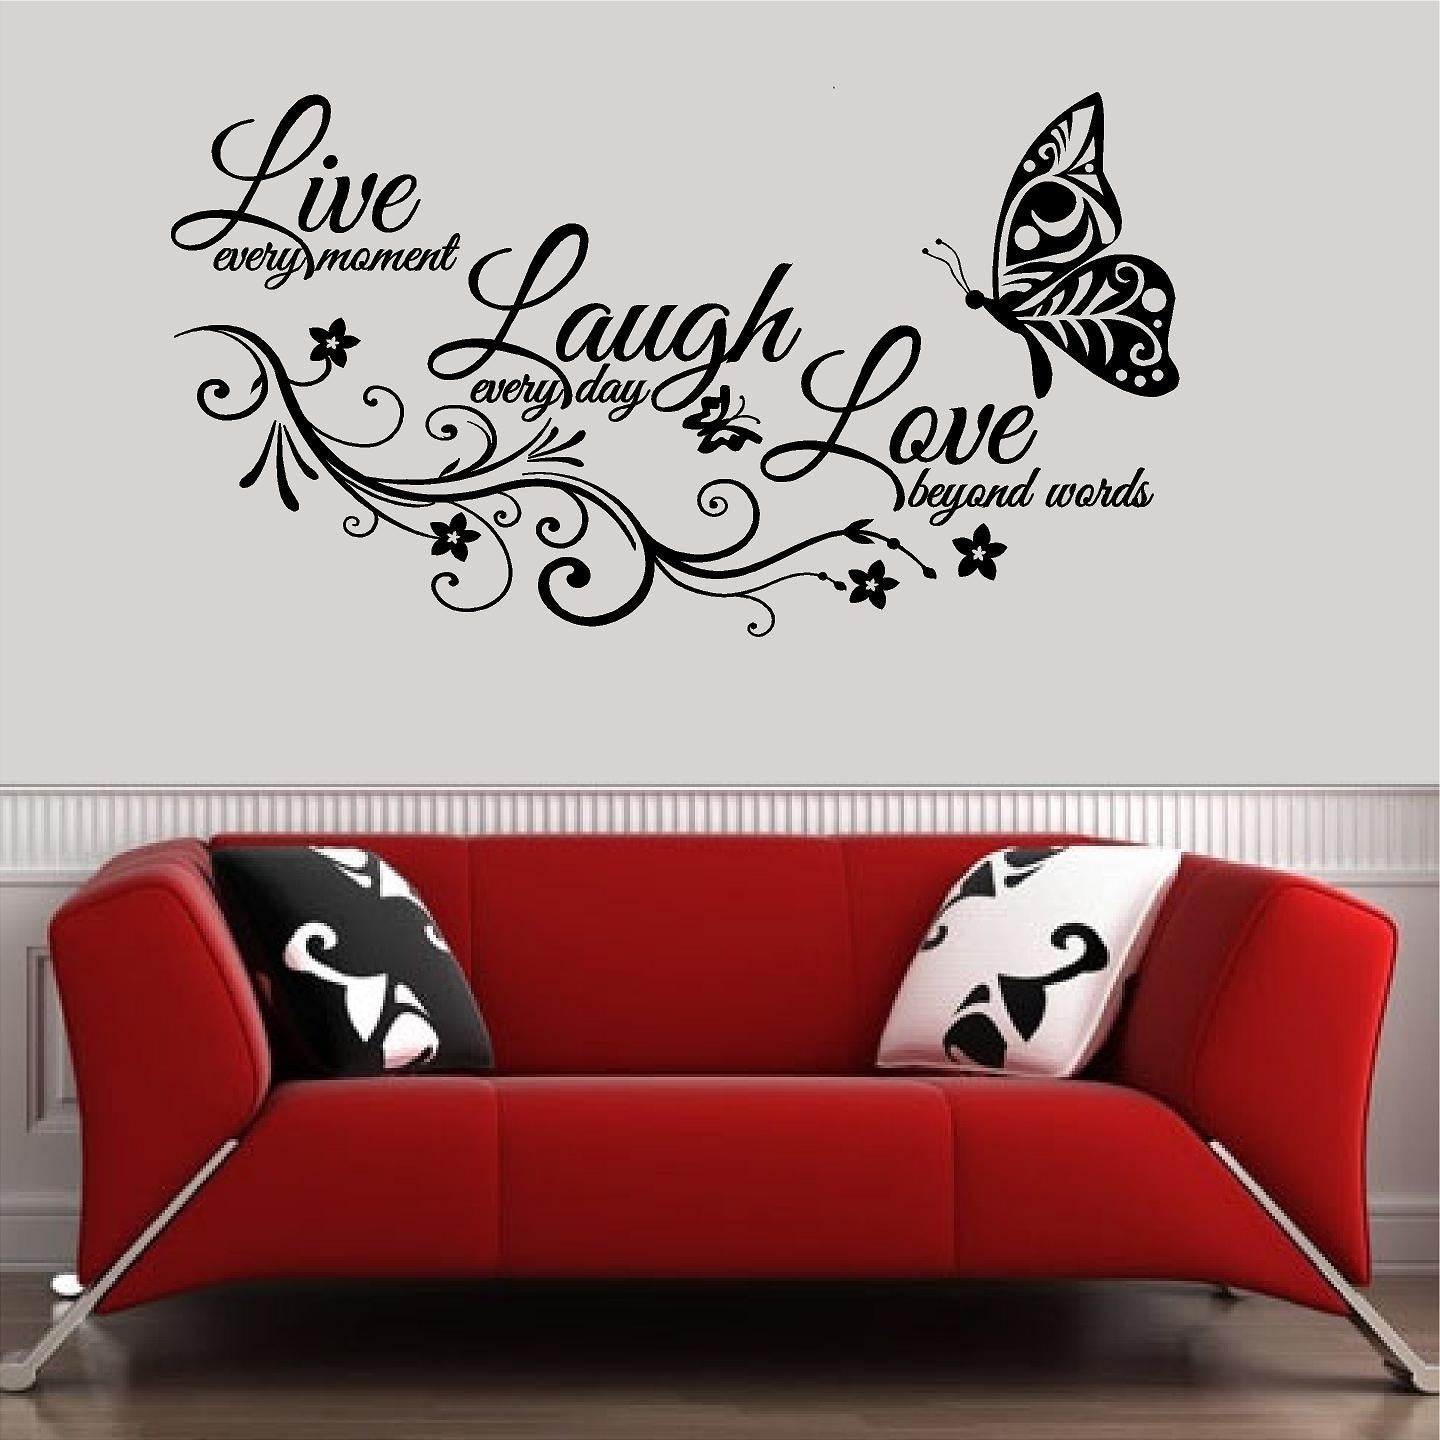 live laugh love decals